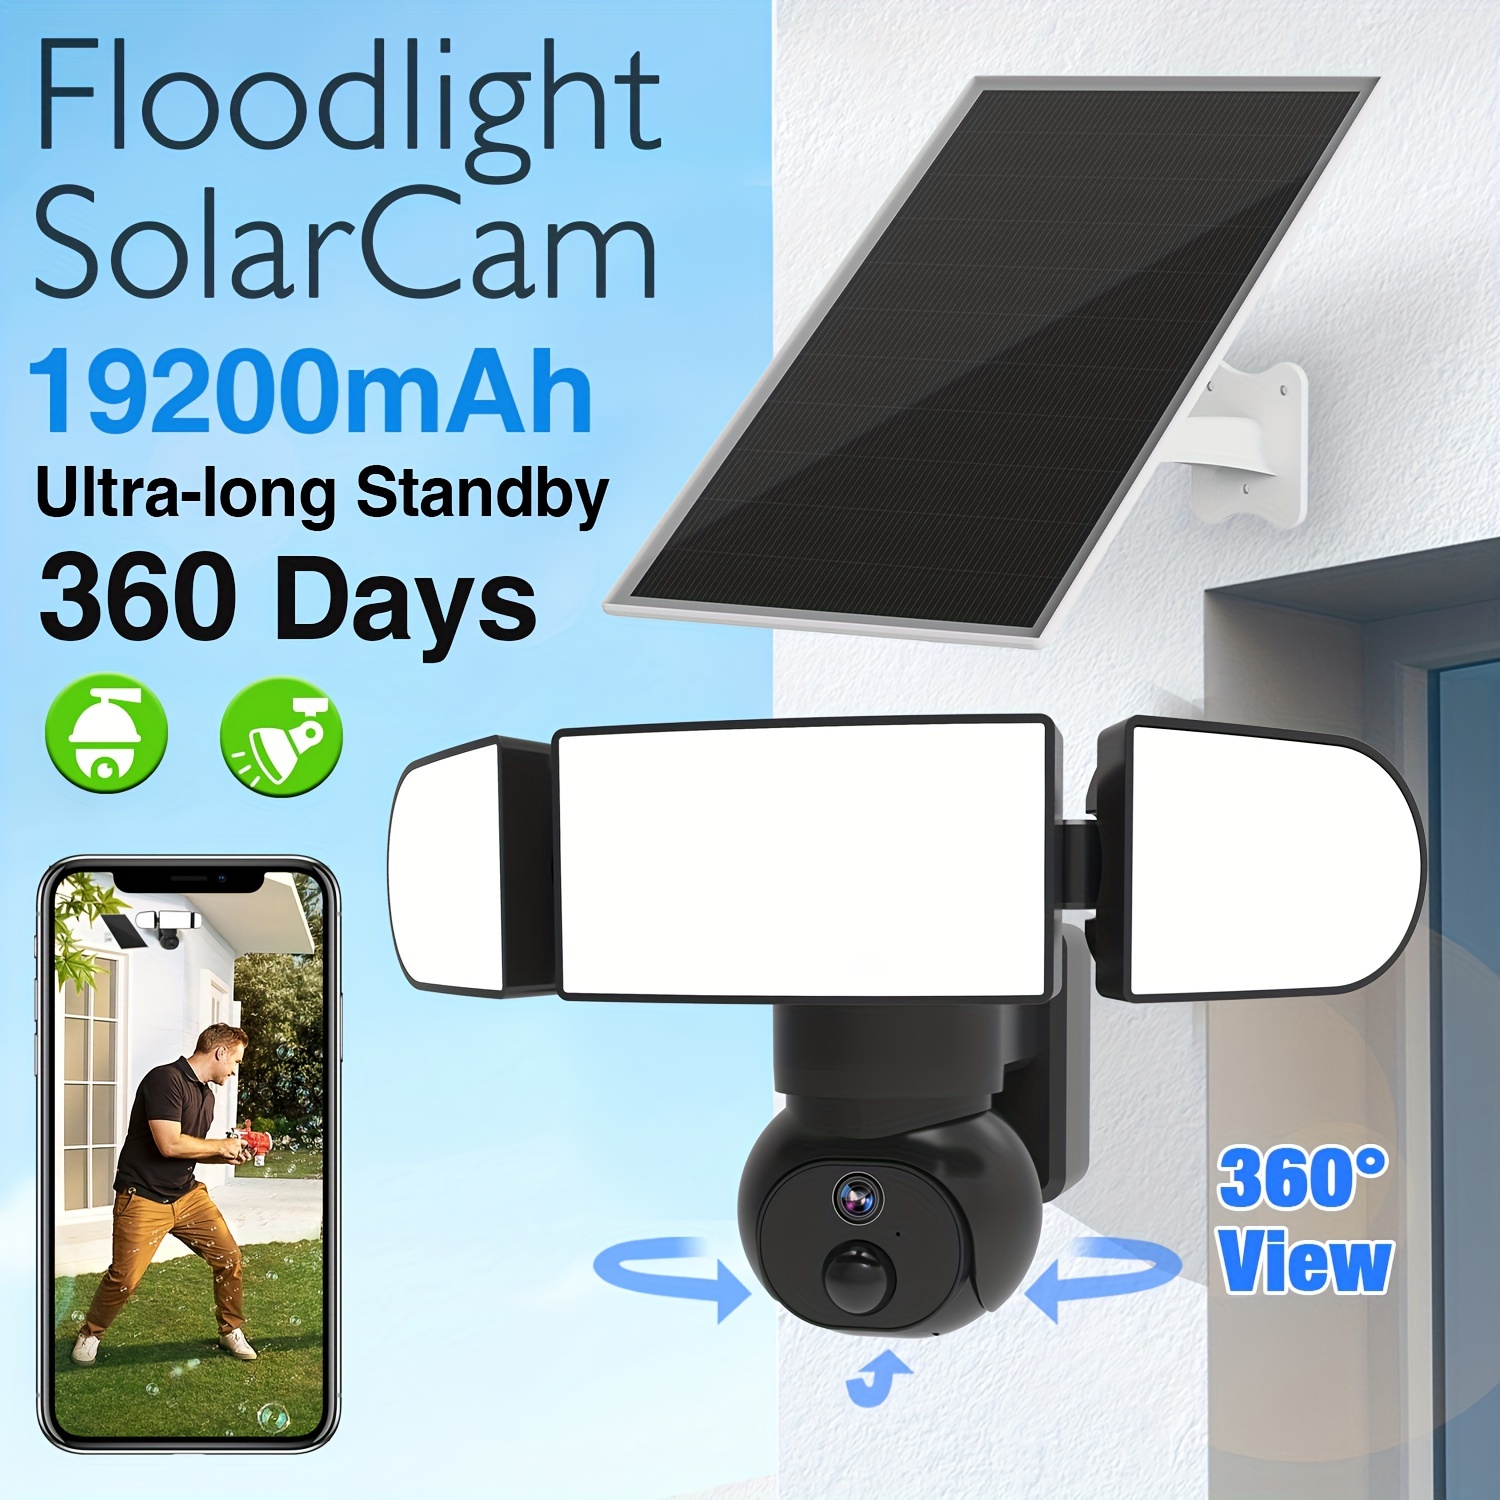 Blink Floodlight Soporte con Luz Led para cámaras de seguridad Blink Outdoor  (activadas por movimiento)